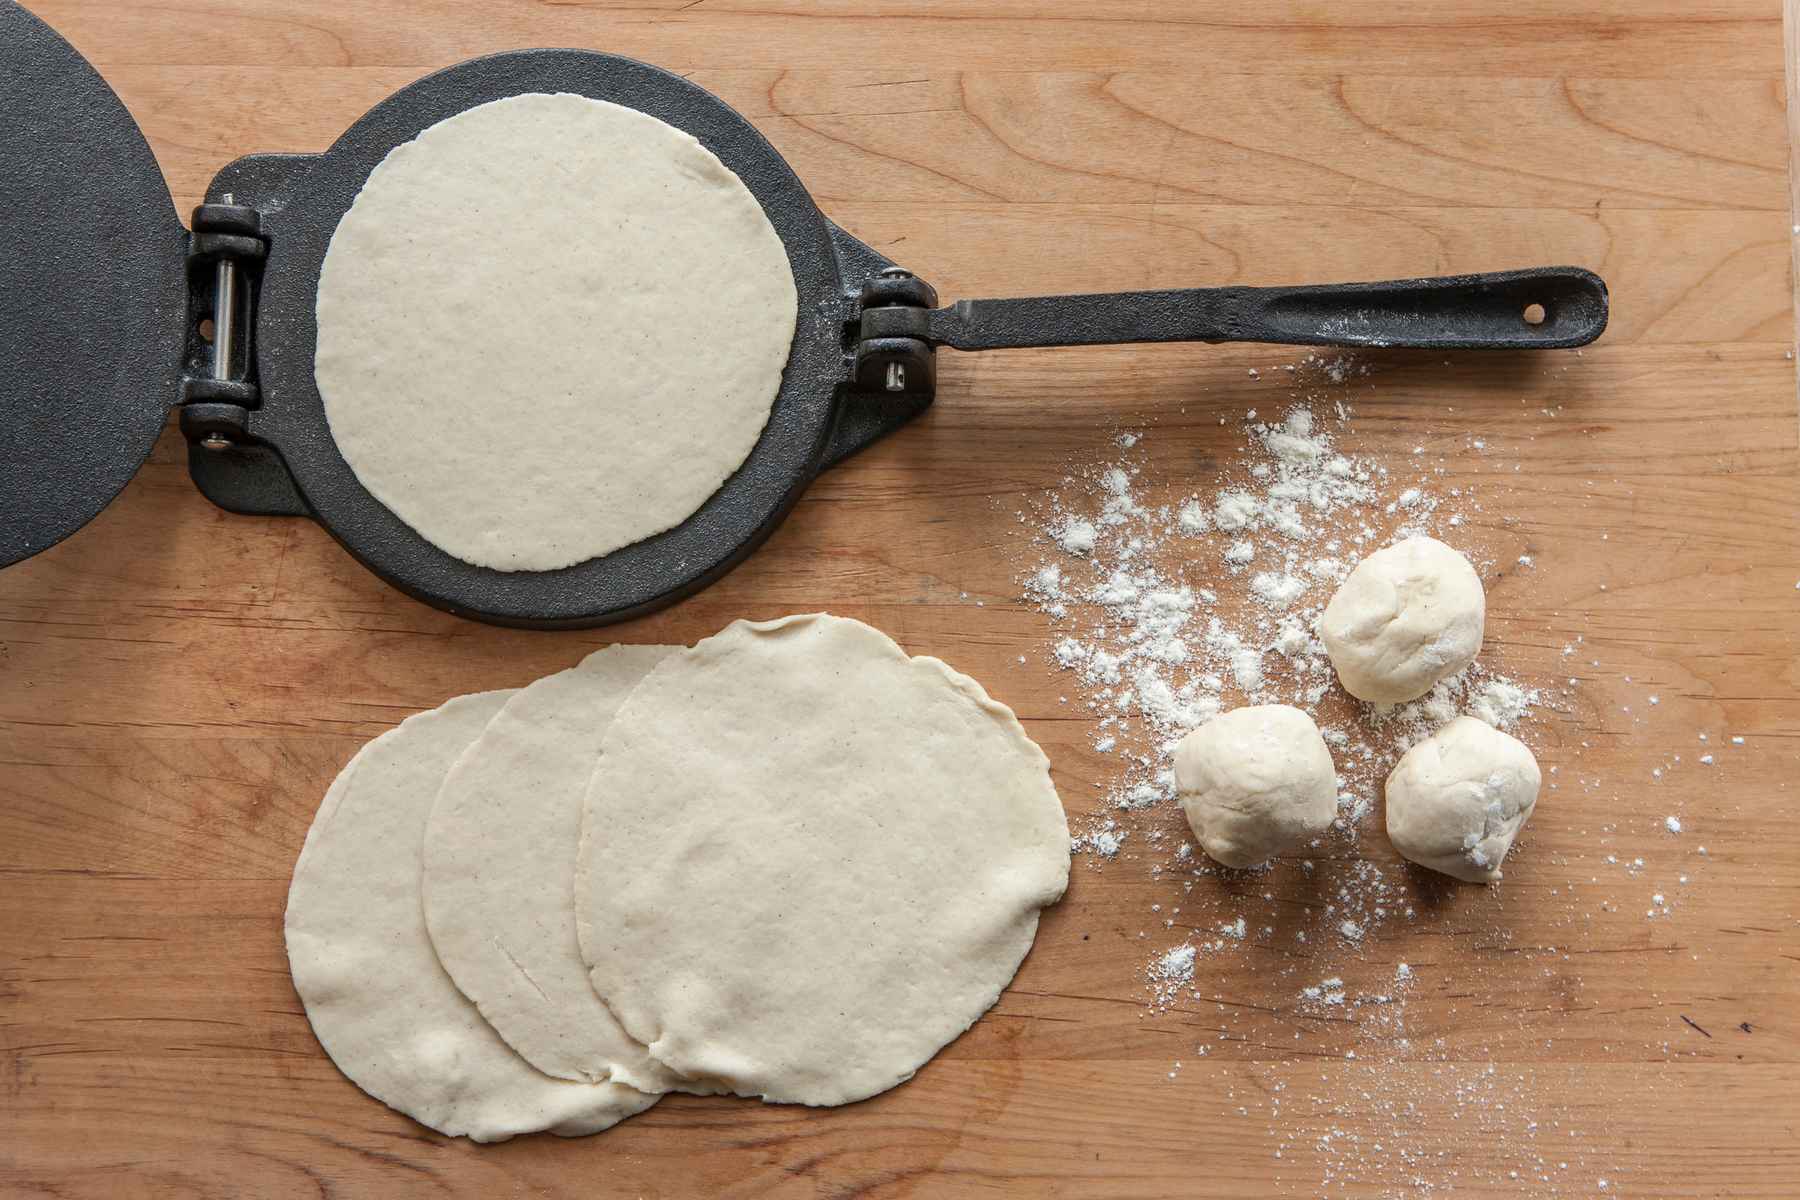 Tortilla maker forming flour tortillas from scratch. Favorite kitchen tools.